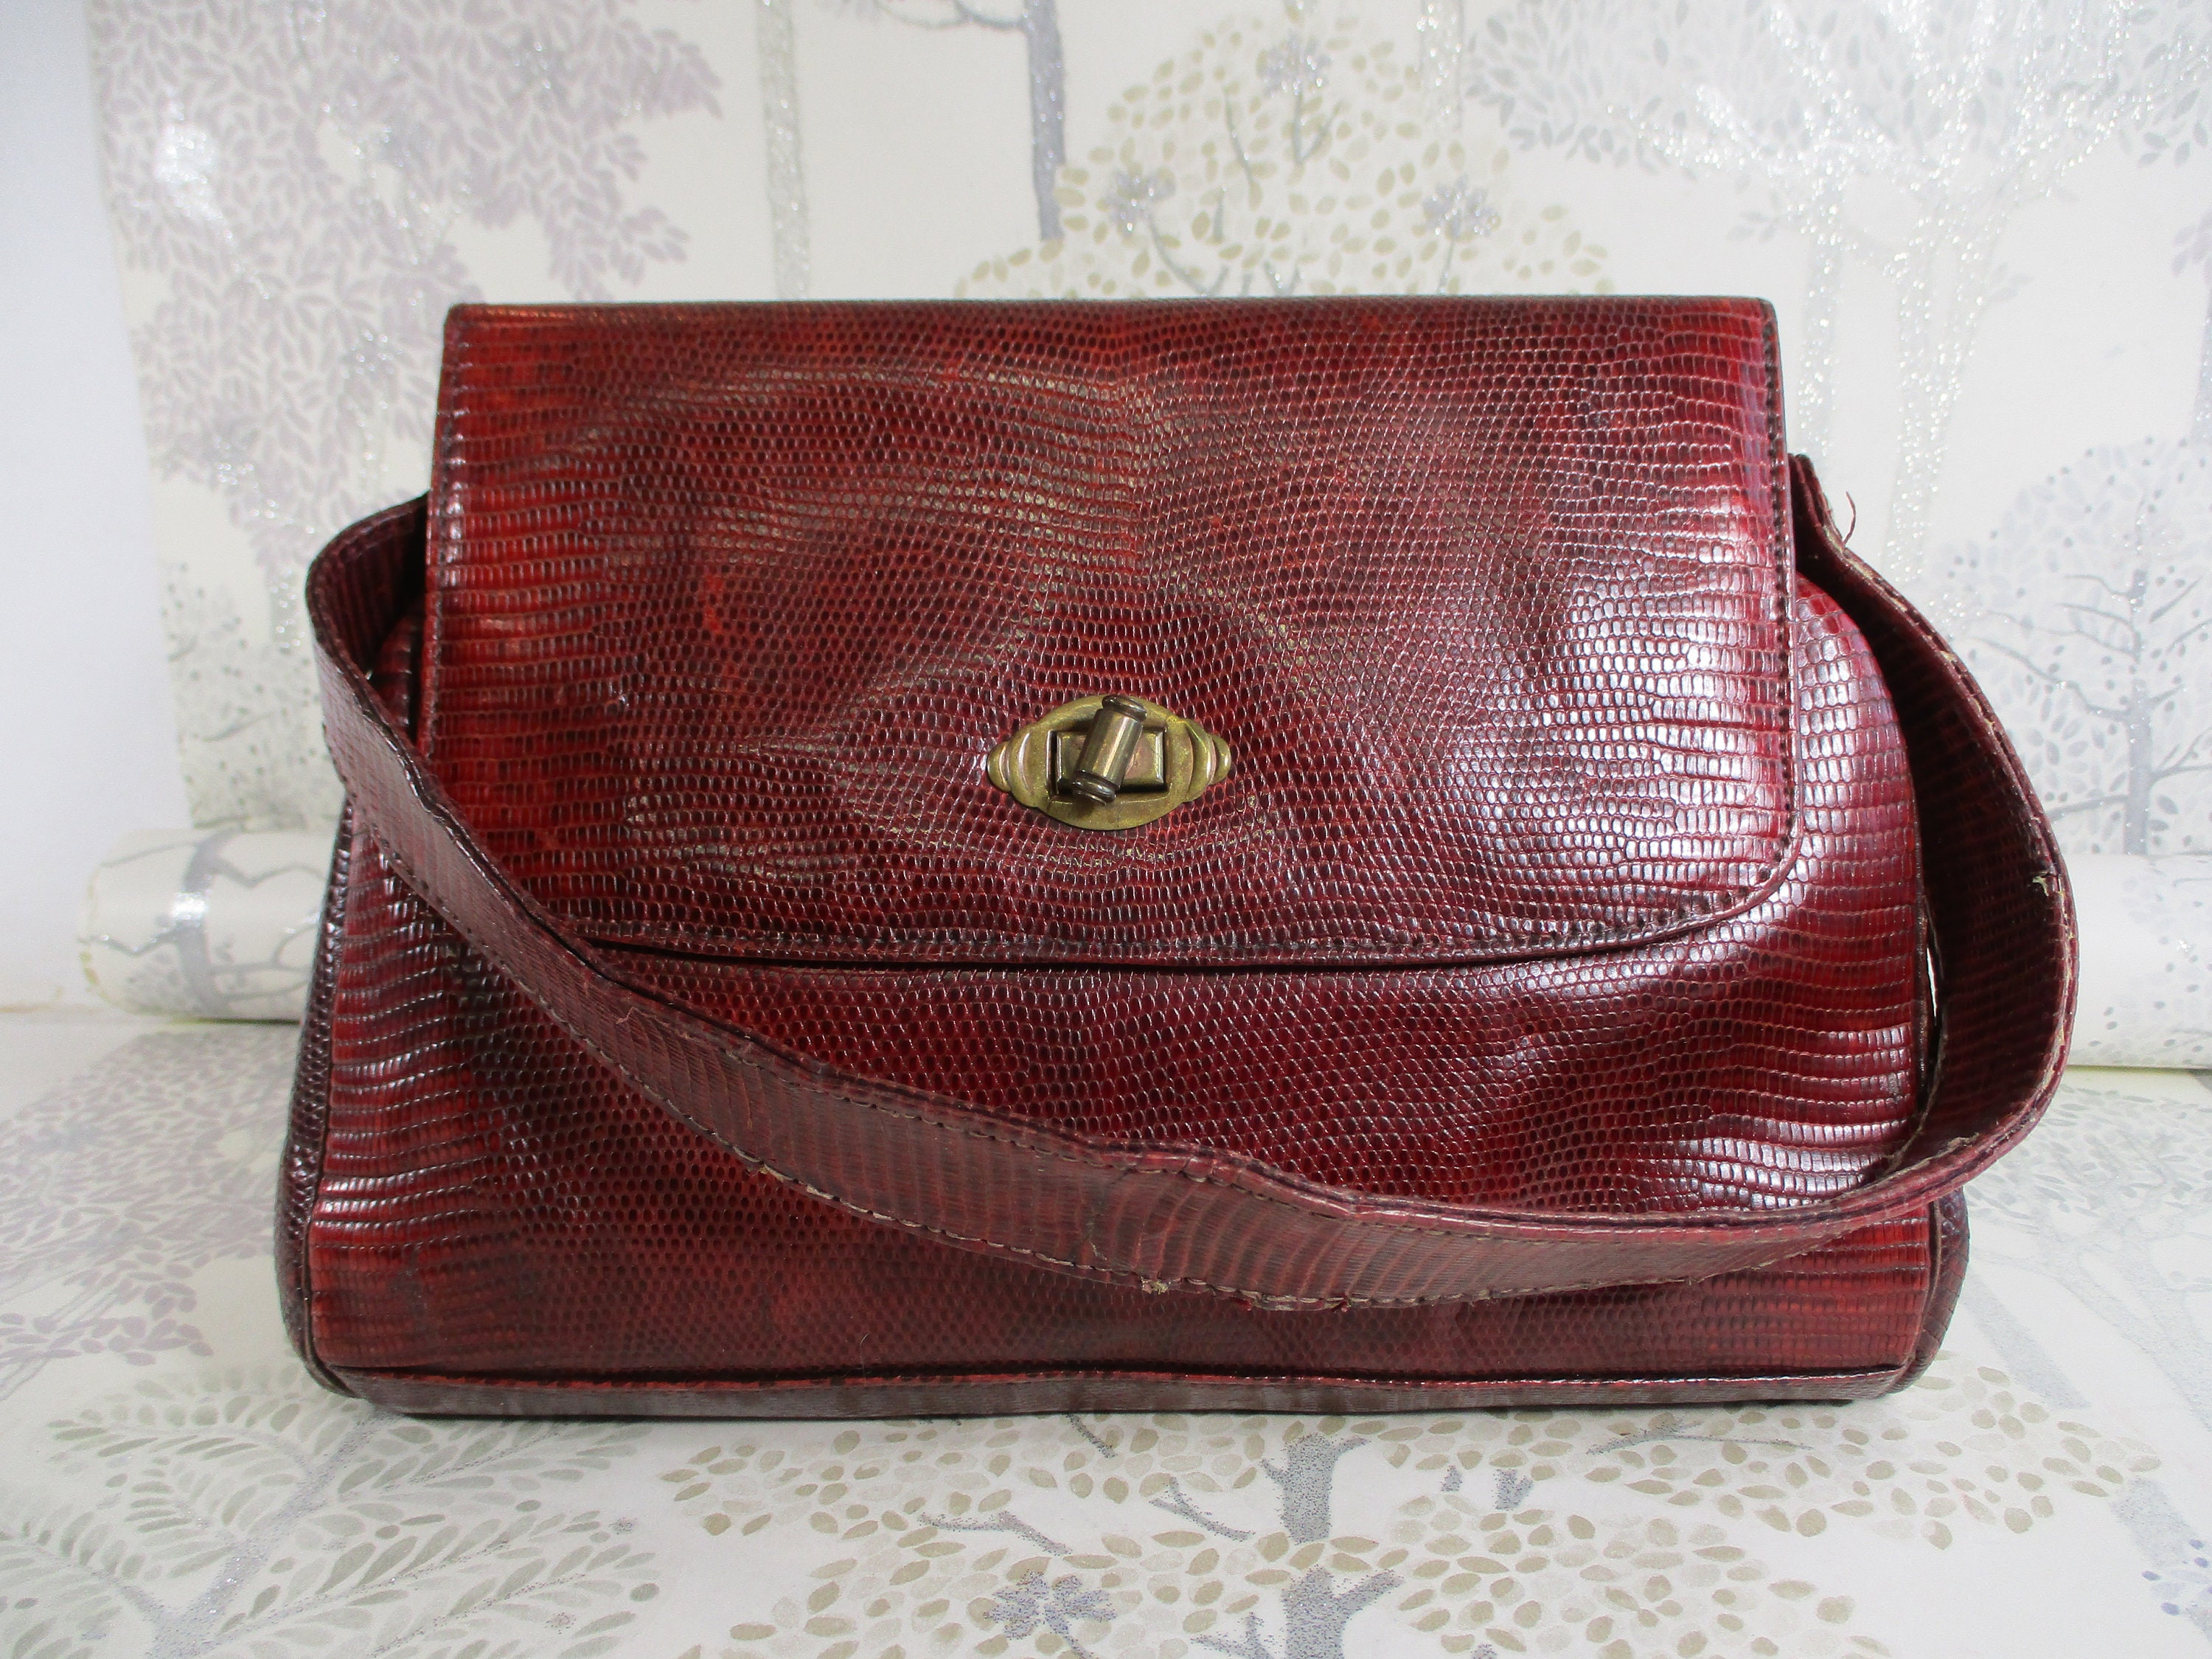 Stunning vintage French 1930's handbag rare shape perfect